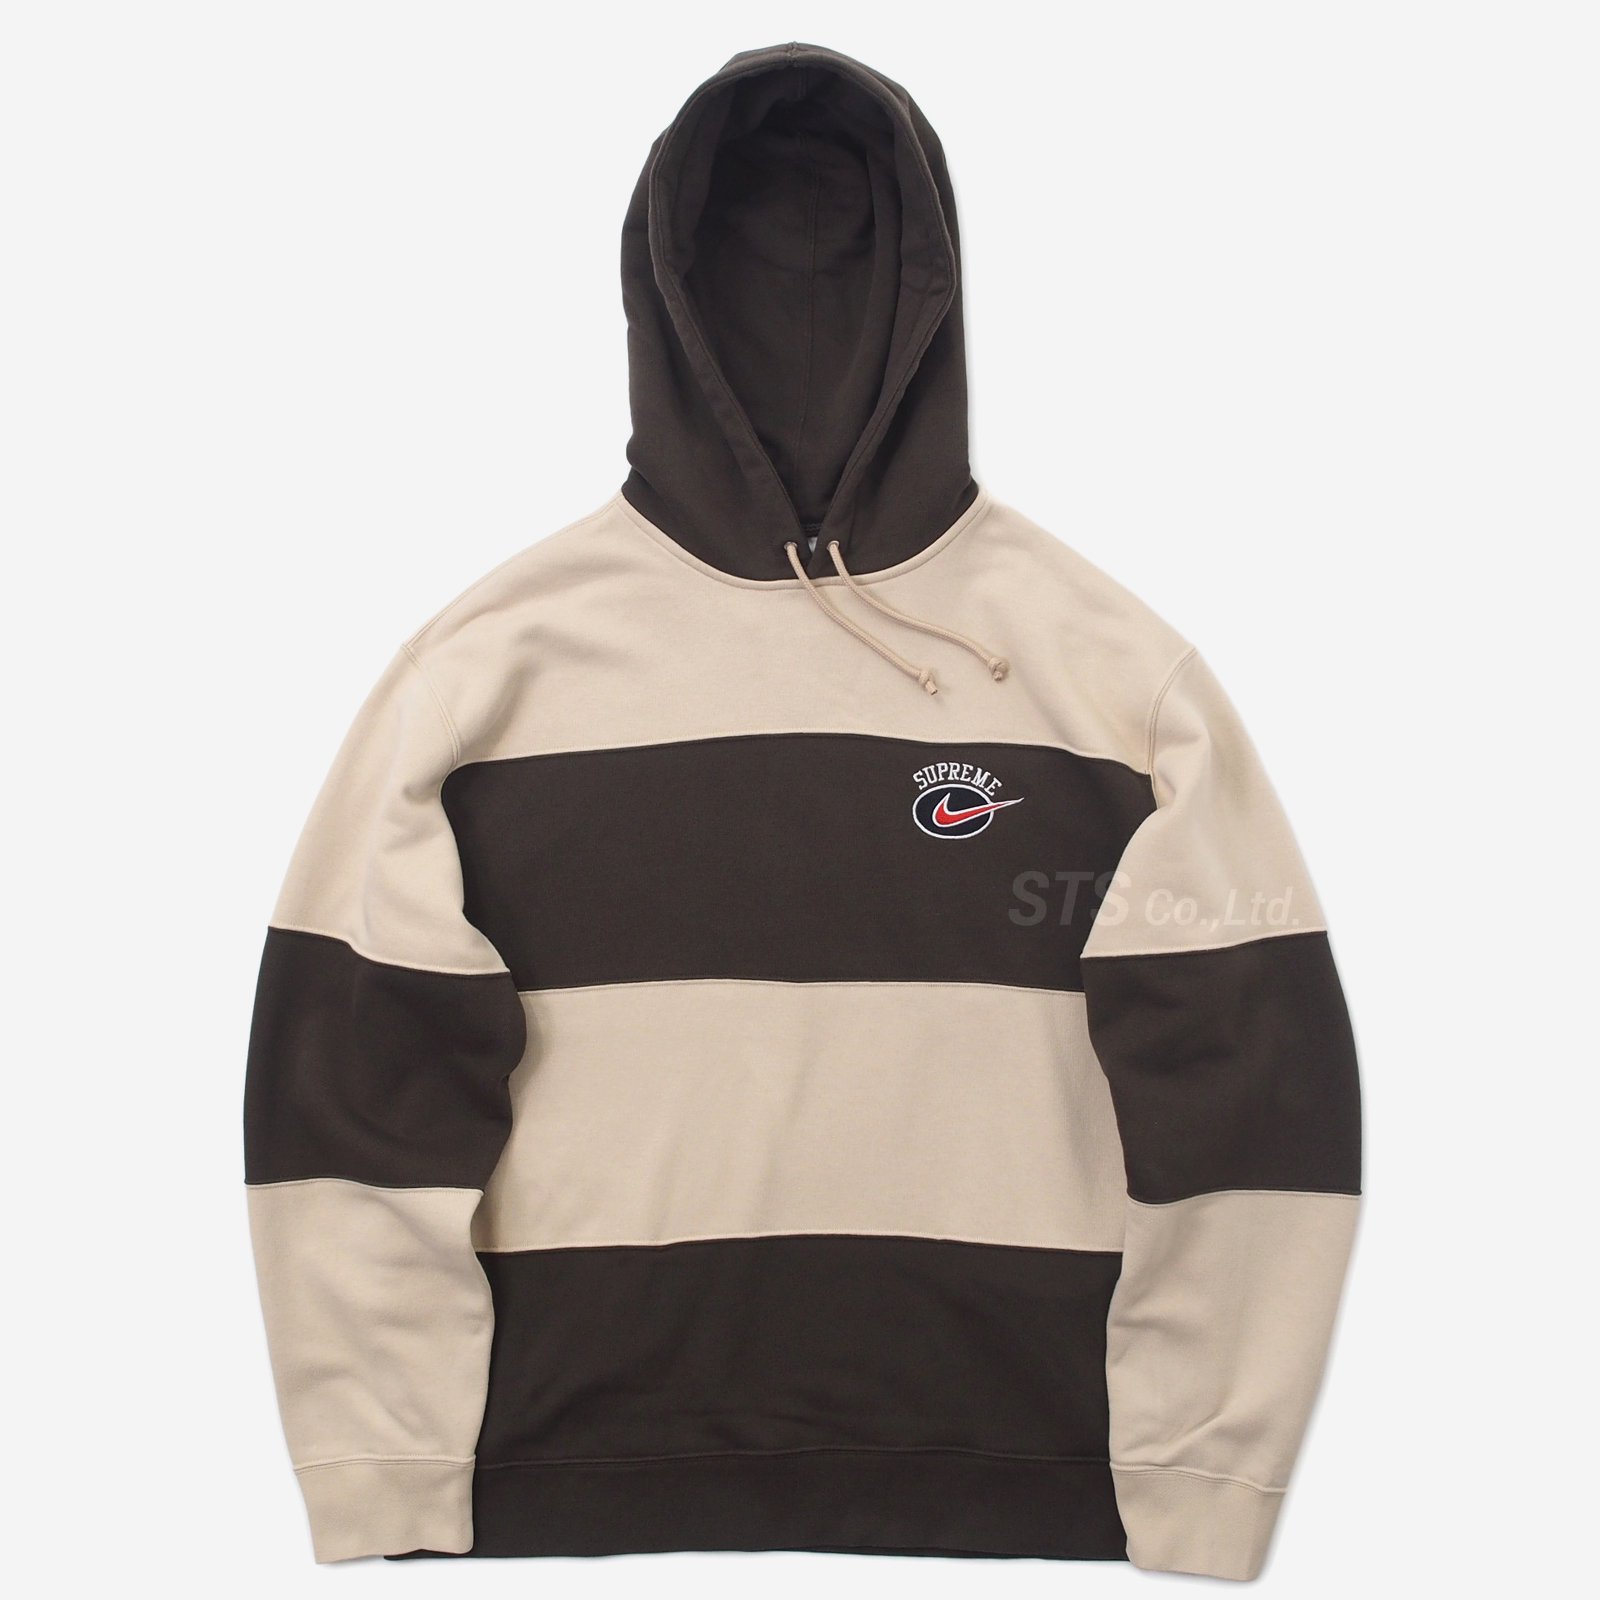 Supreme/Nike Stripe Hooded Sweatshirt - UG.SHAFT